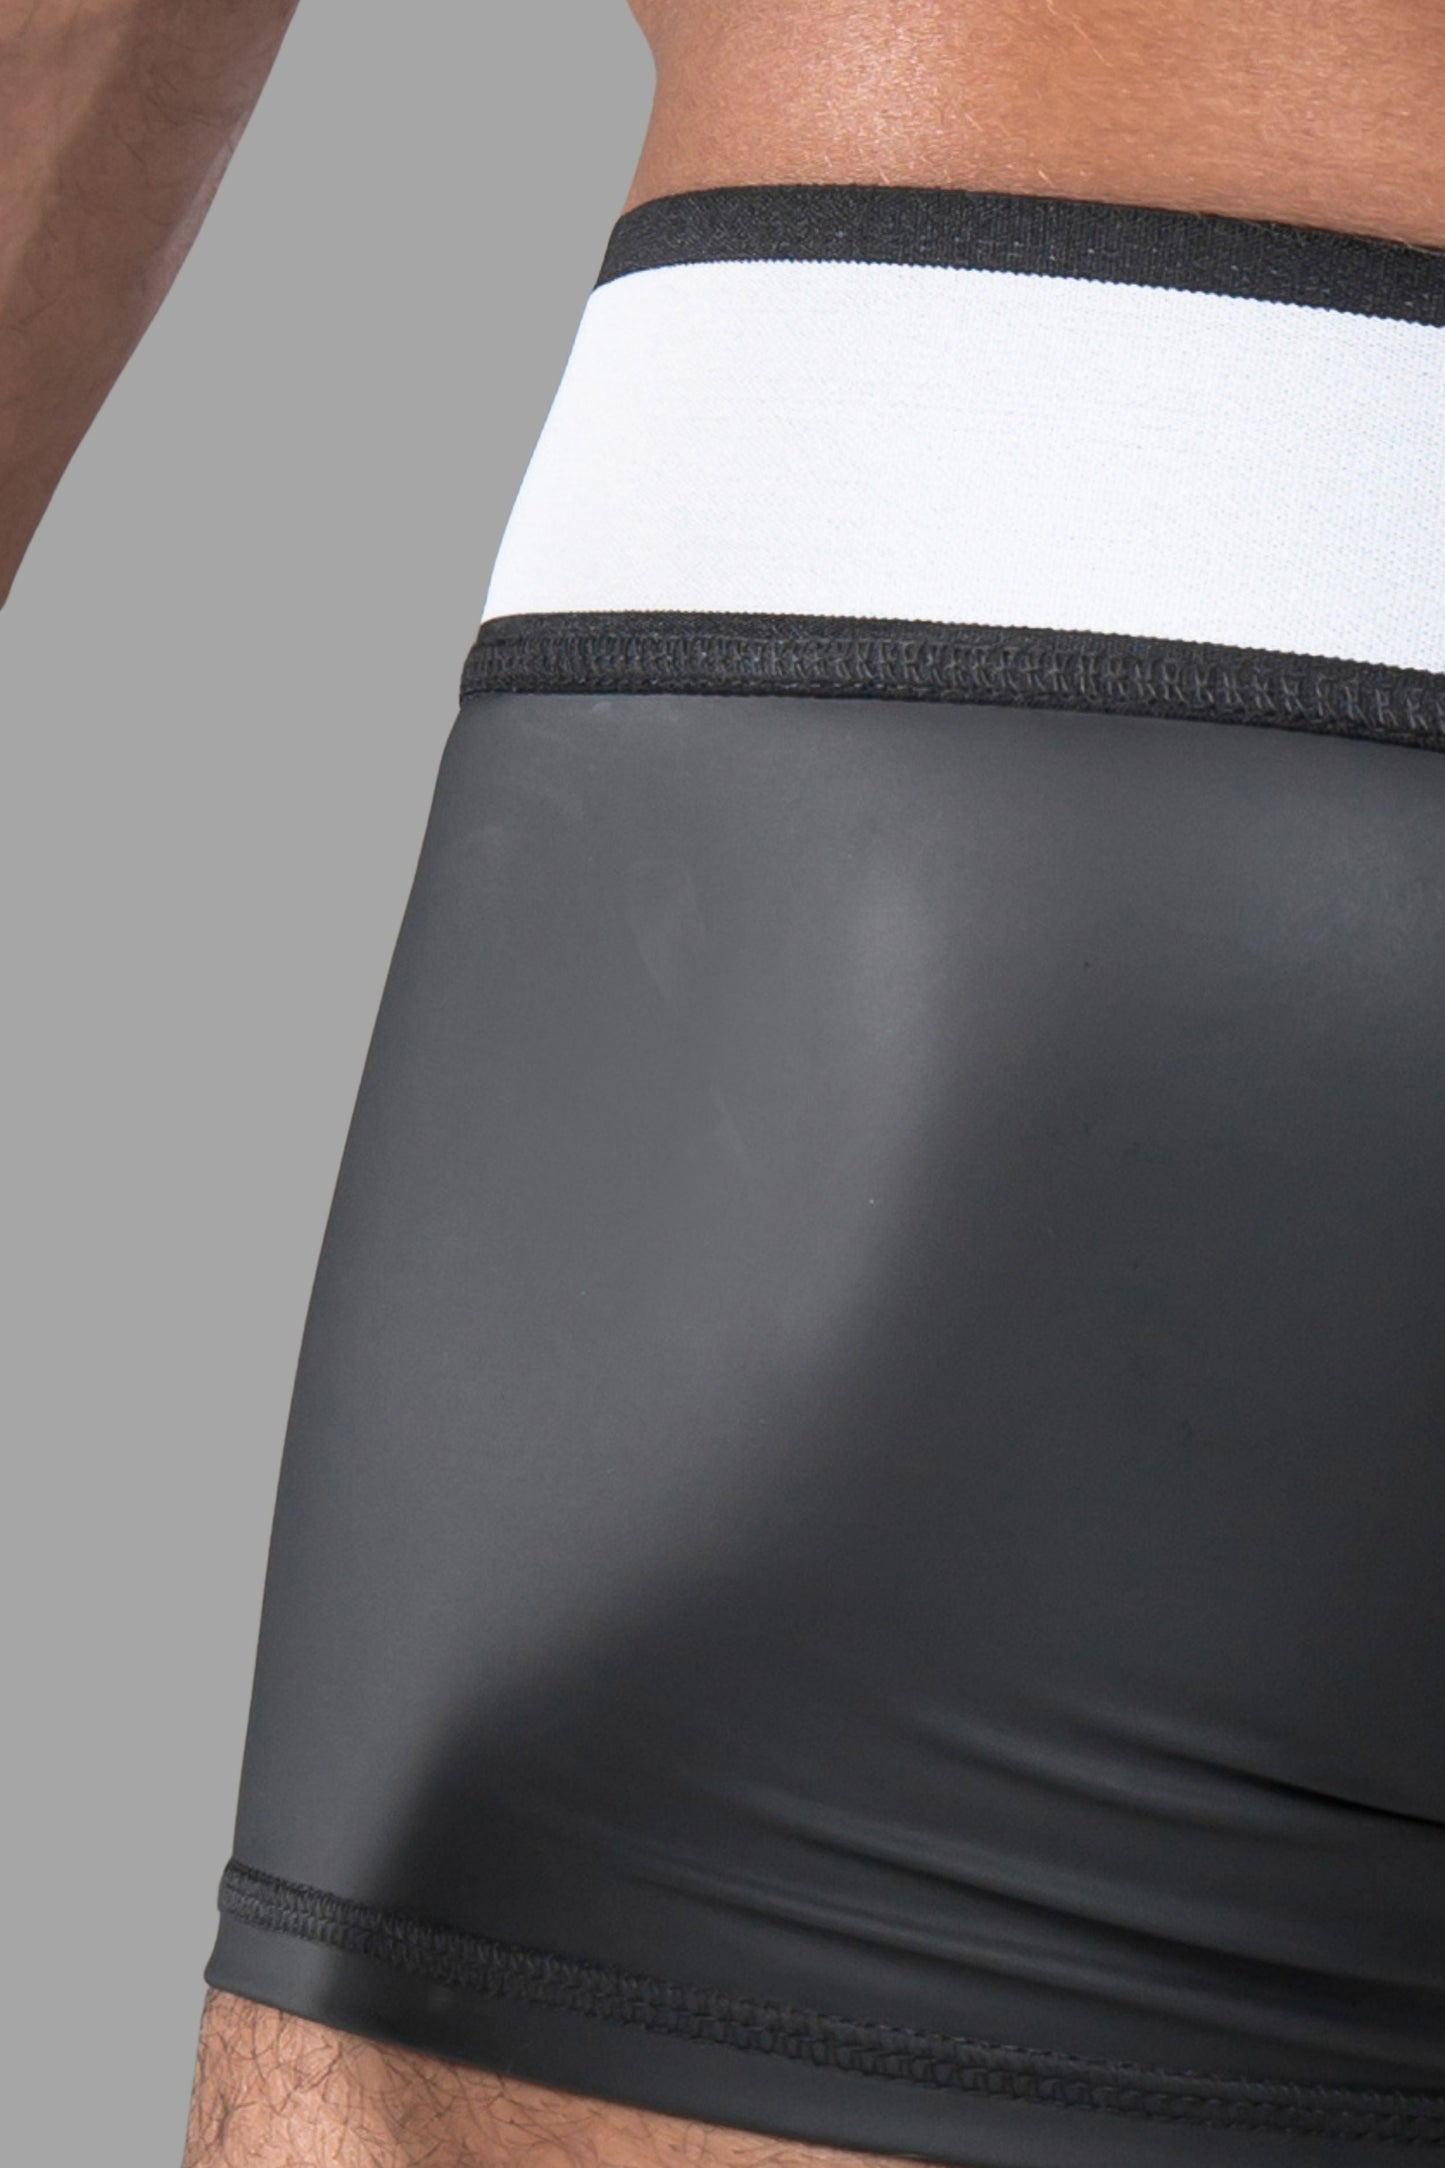 Gepanzert. Trunk-Shorts im Gummi-Look. Abnehmbare Tasche. Hinten mit Reißverschluss. Schwarz